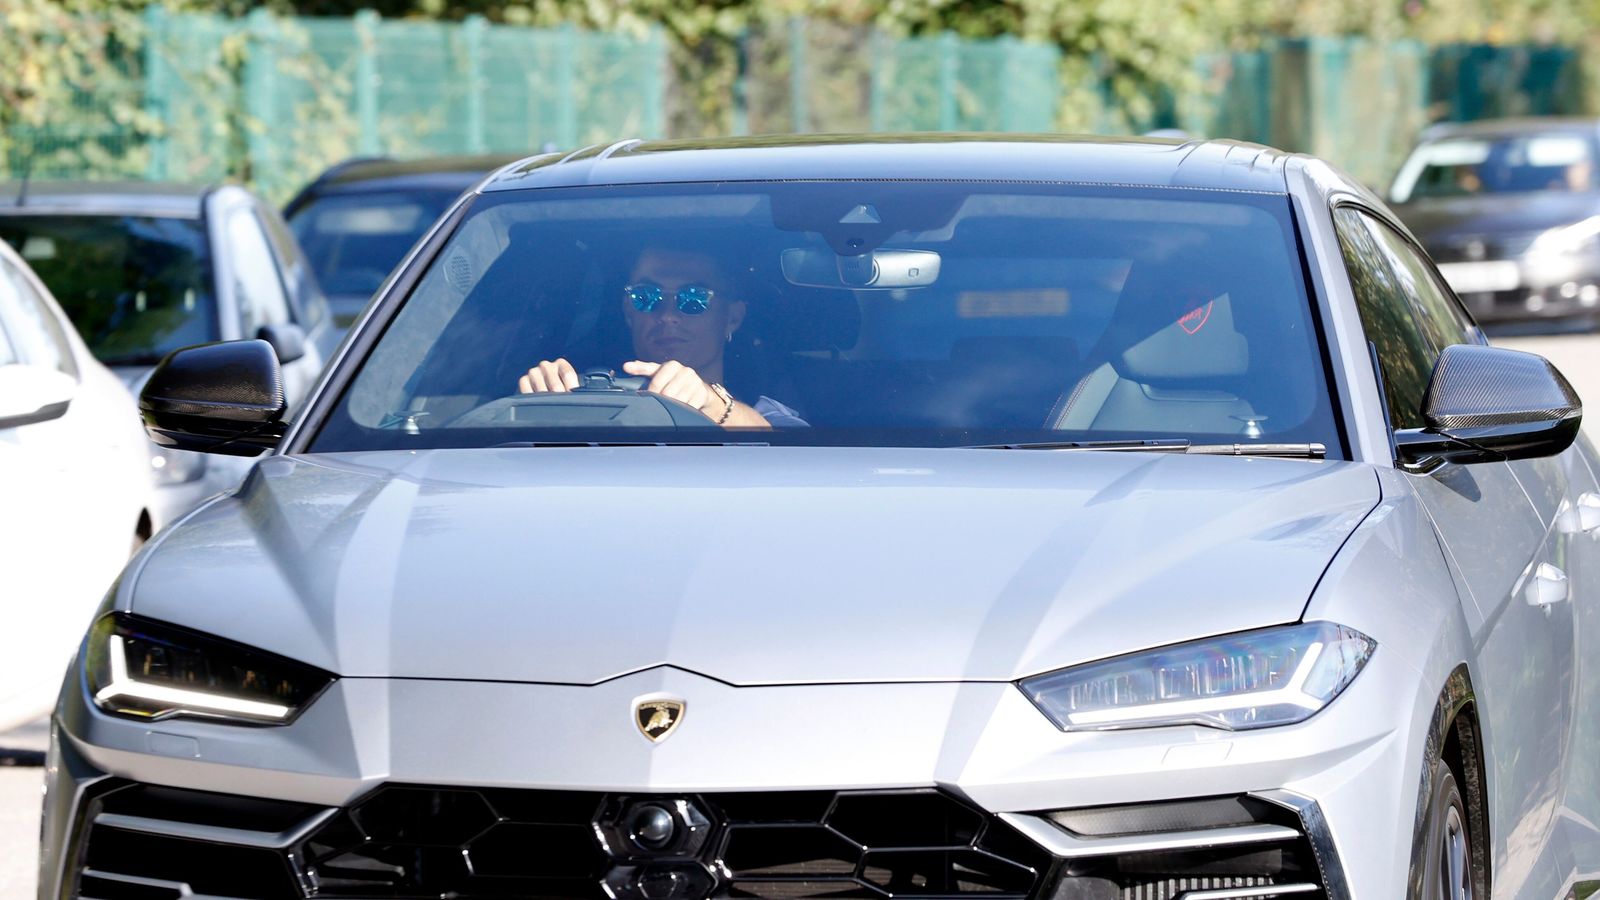 Cristiano Ronaldo arrives for Manchester United training in a Lamborghini Urus